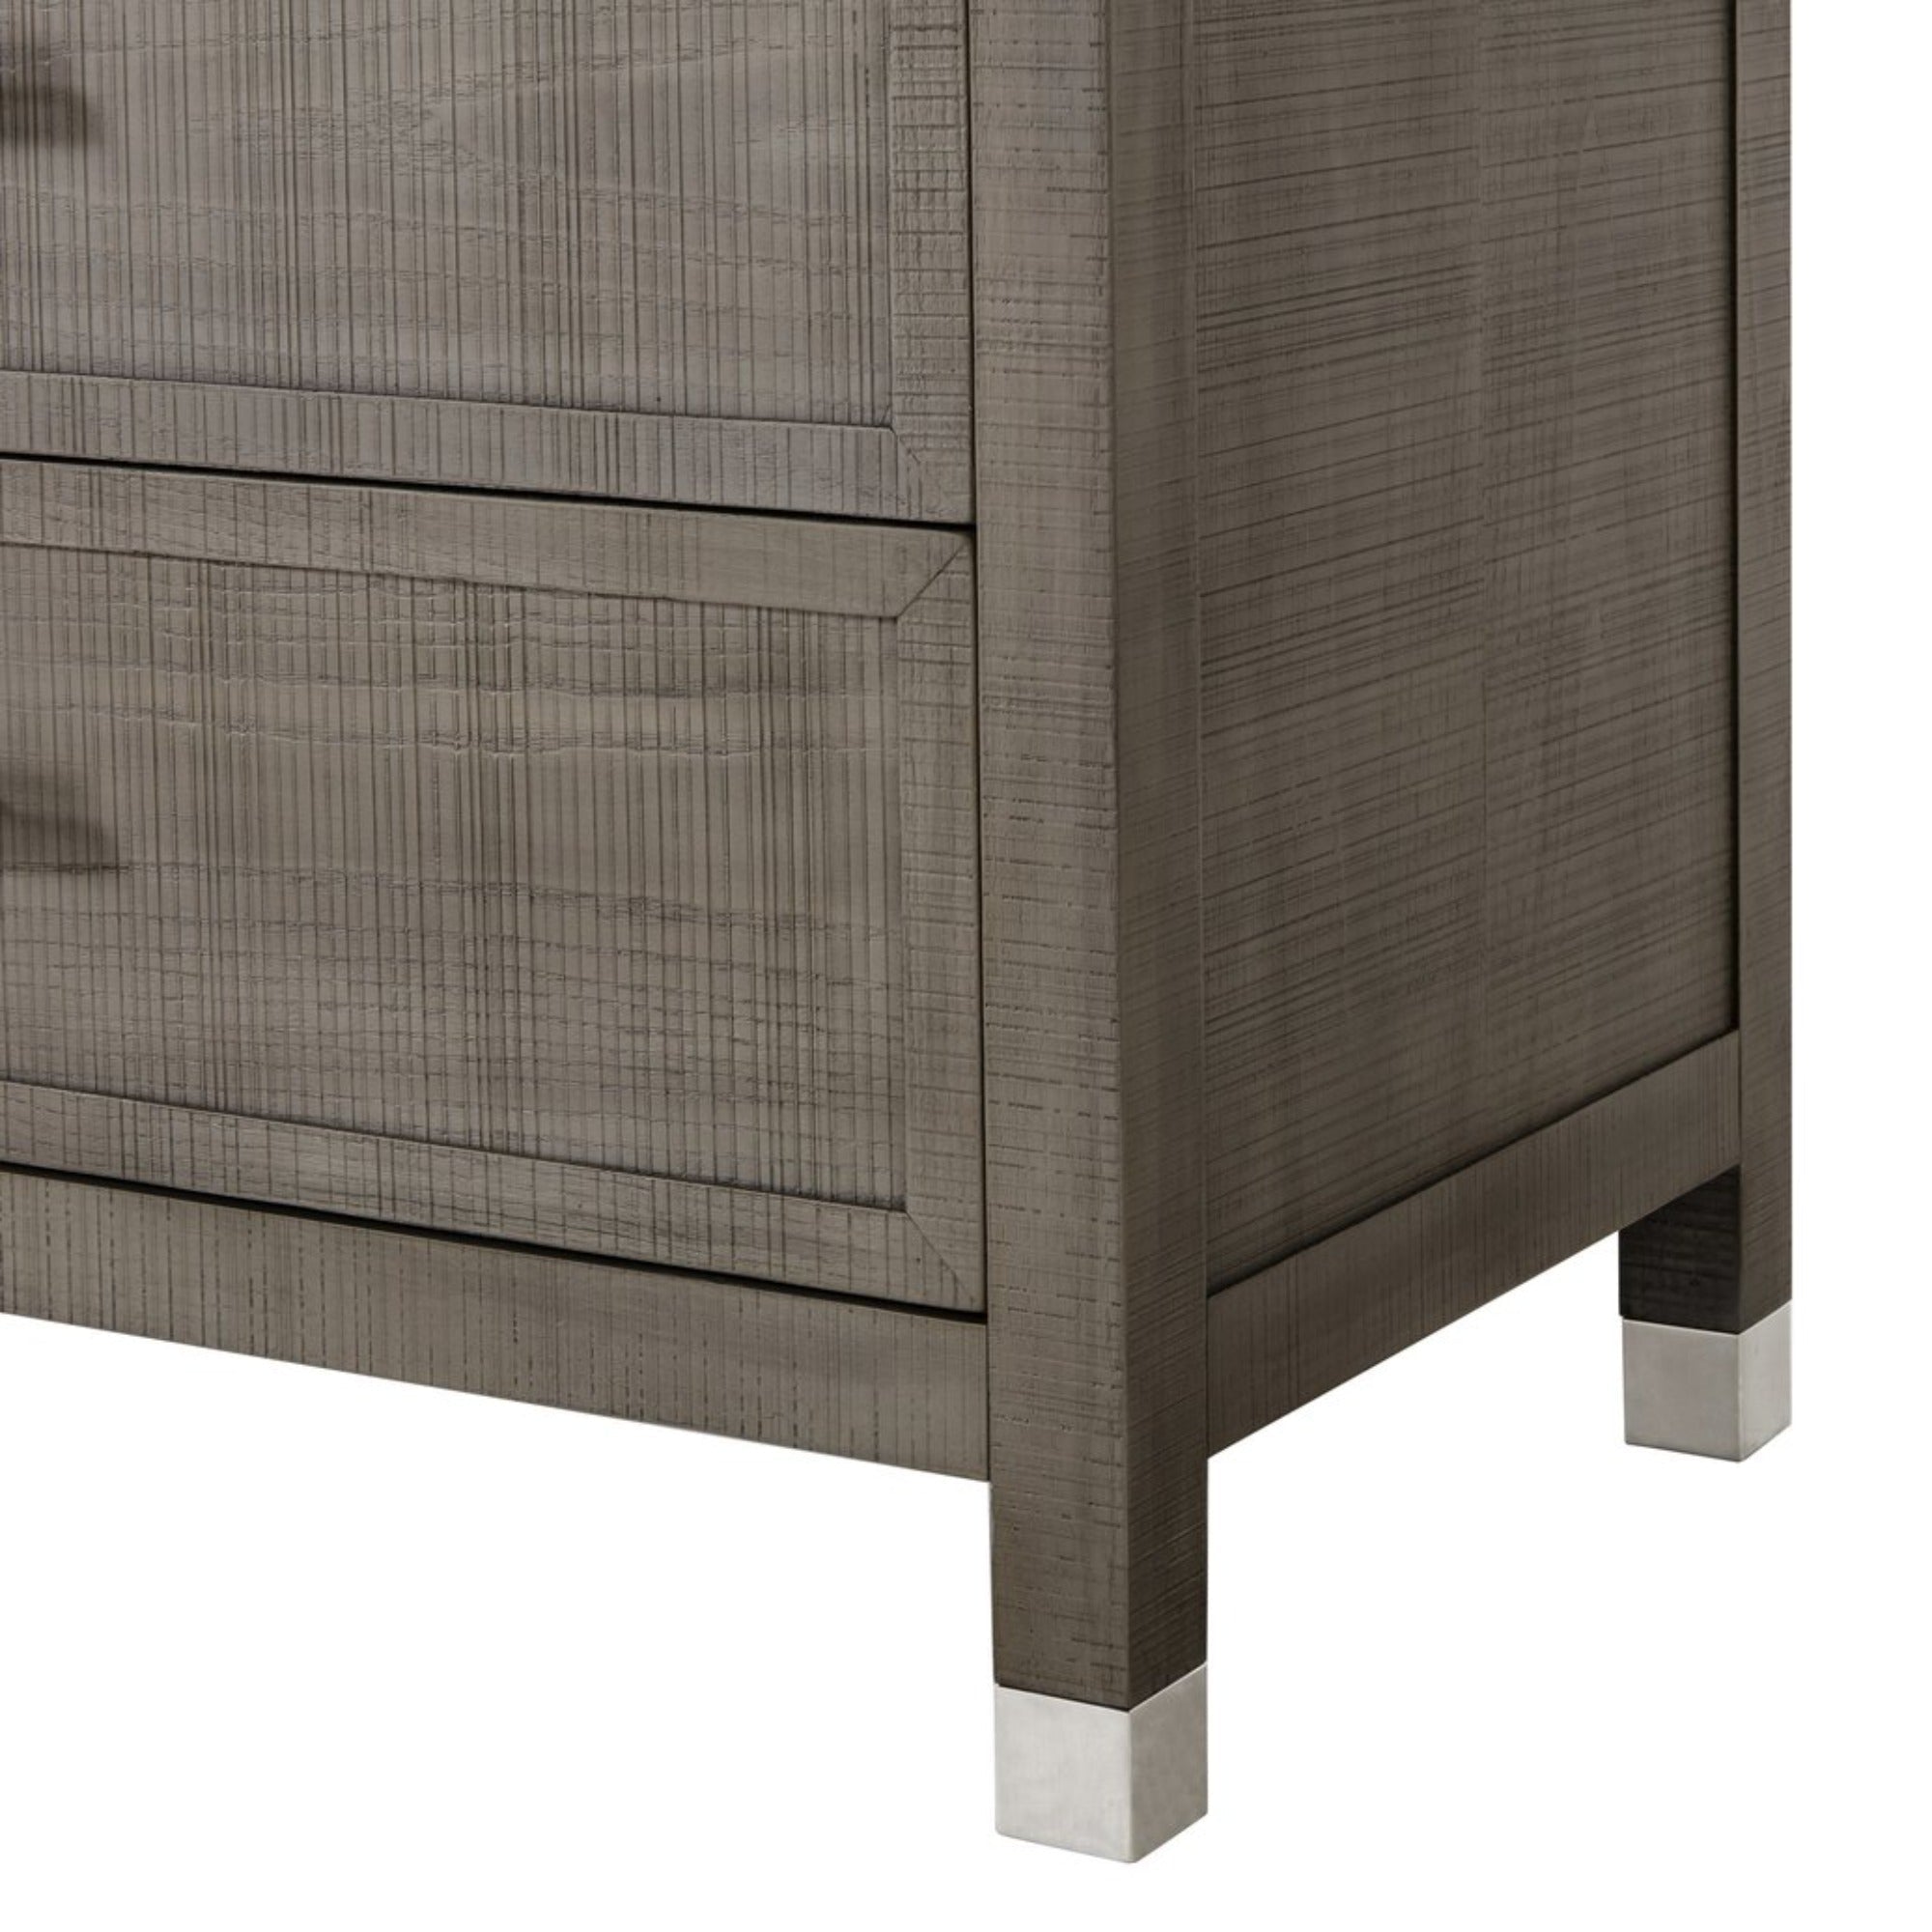 Raffles Dresser- StyleMeGHD - Coastal Bedroom Furniture